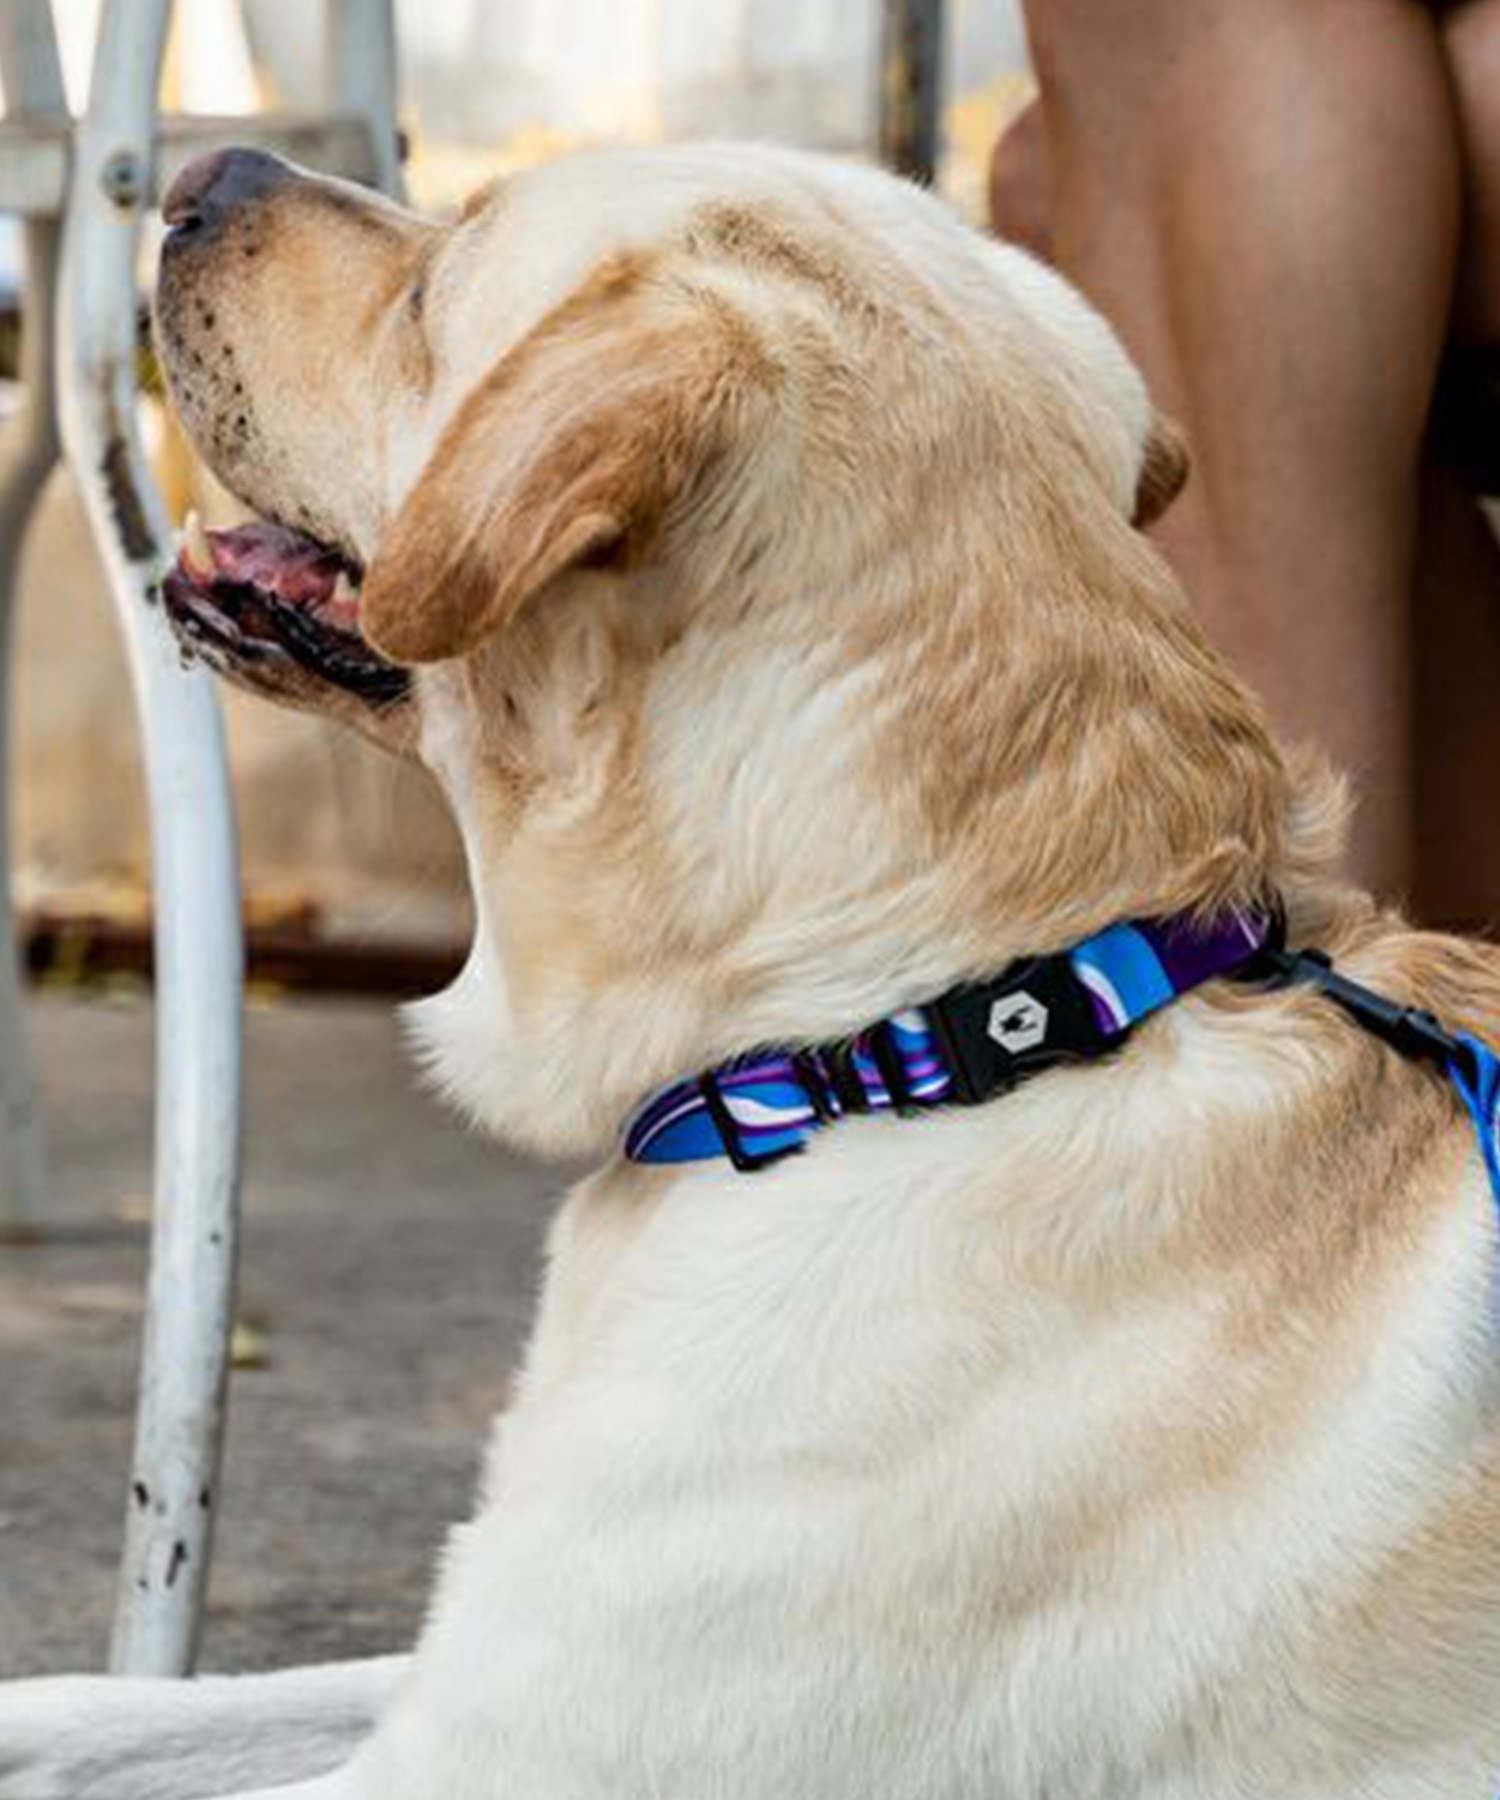 WOLFGANG ウルフギャング 犬用 首輪 MarbleWave Collar Sサイズ 超小型犬用 小型犬用 マーブルウェイブ カラー ブルー系 WC-001-102(PU-S)